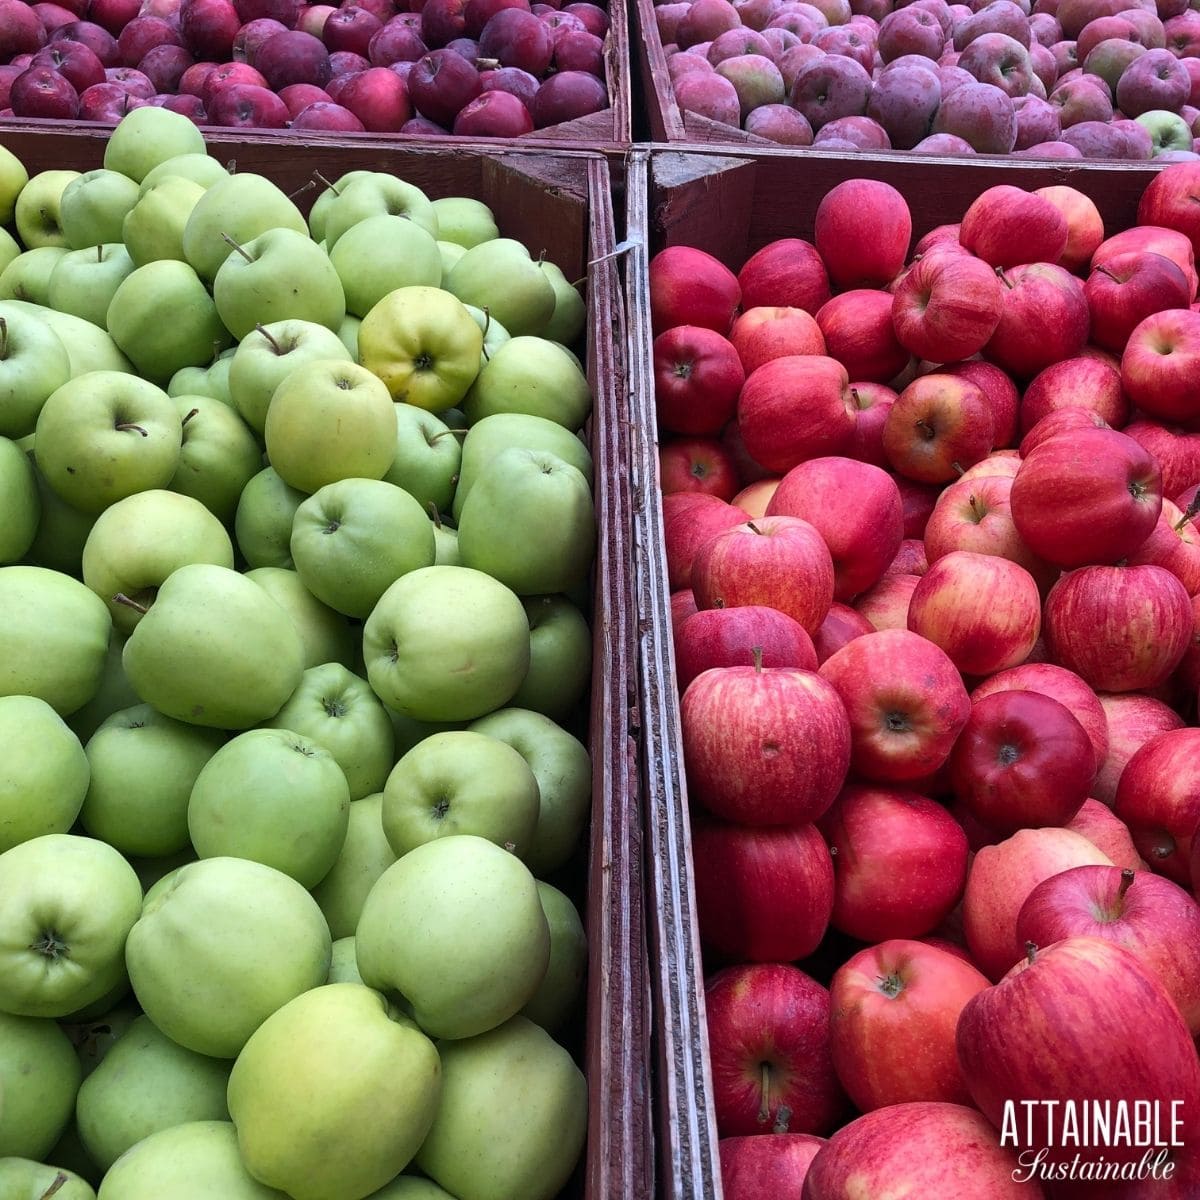 Different varieties of apples harvested in bins. 